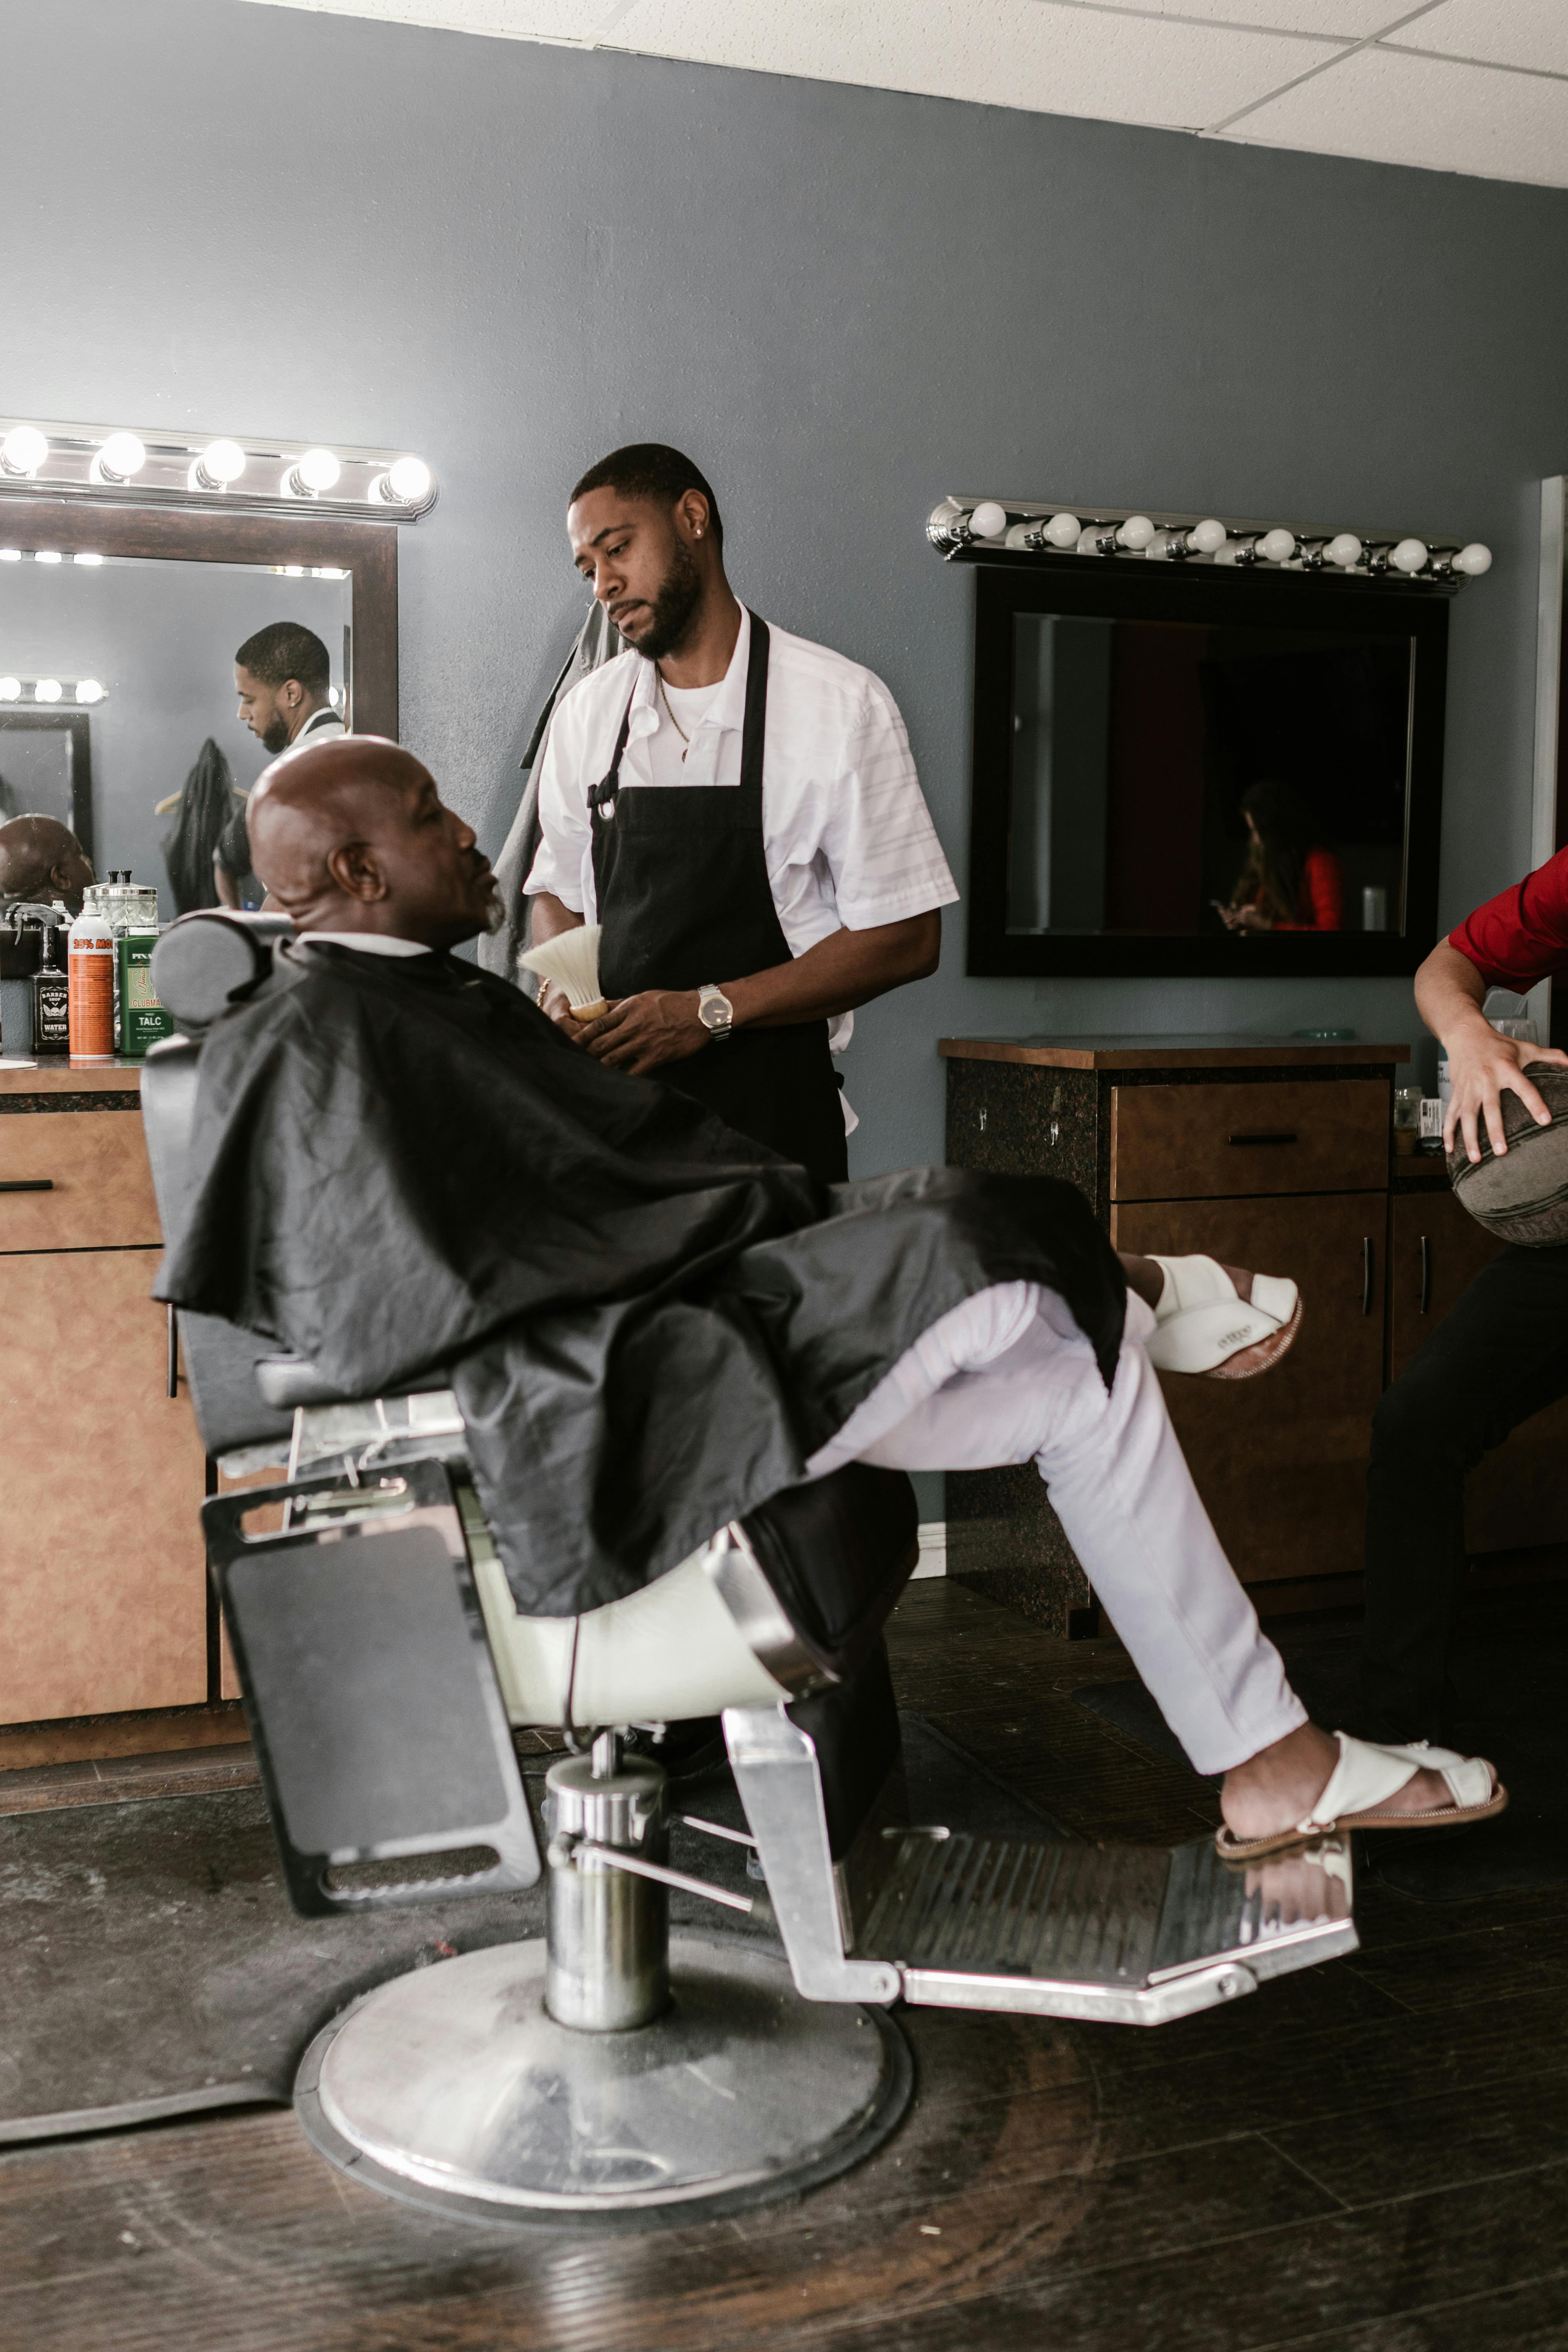 Barbershop Photos, Download The BEST Free Barbershop Stock Photos